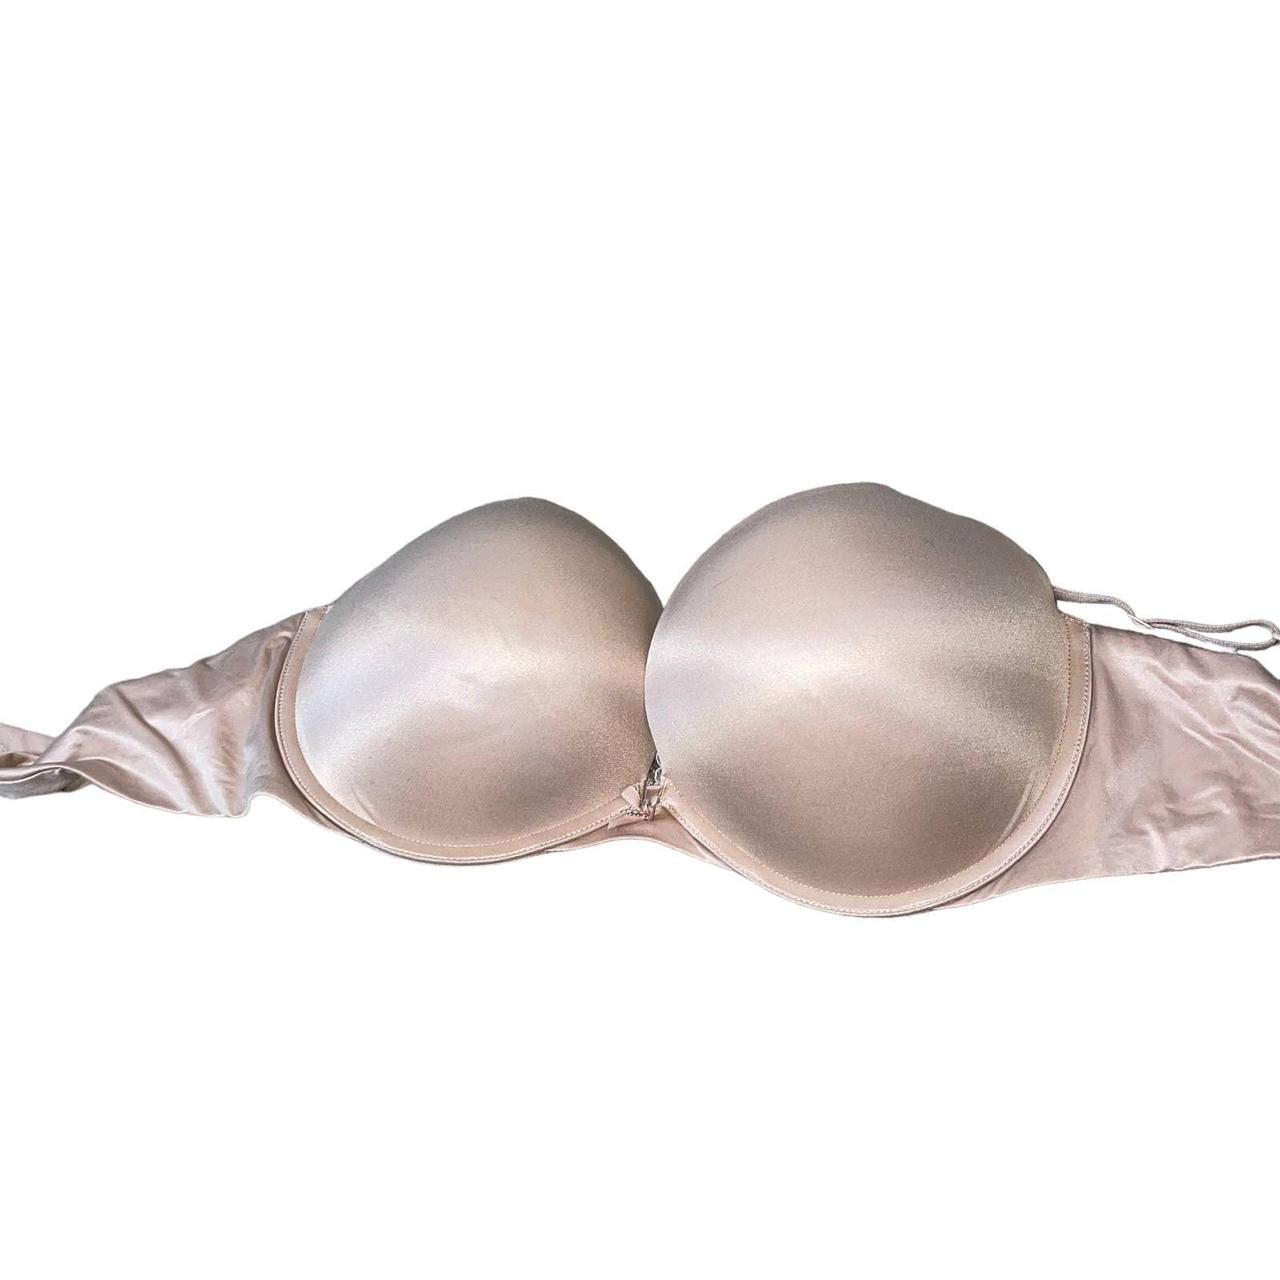 Victoria's Secret bra nude 36DD push up underwire